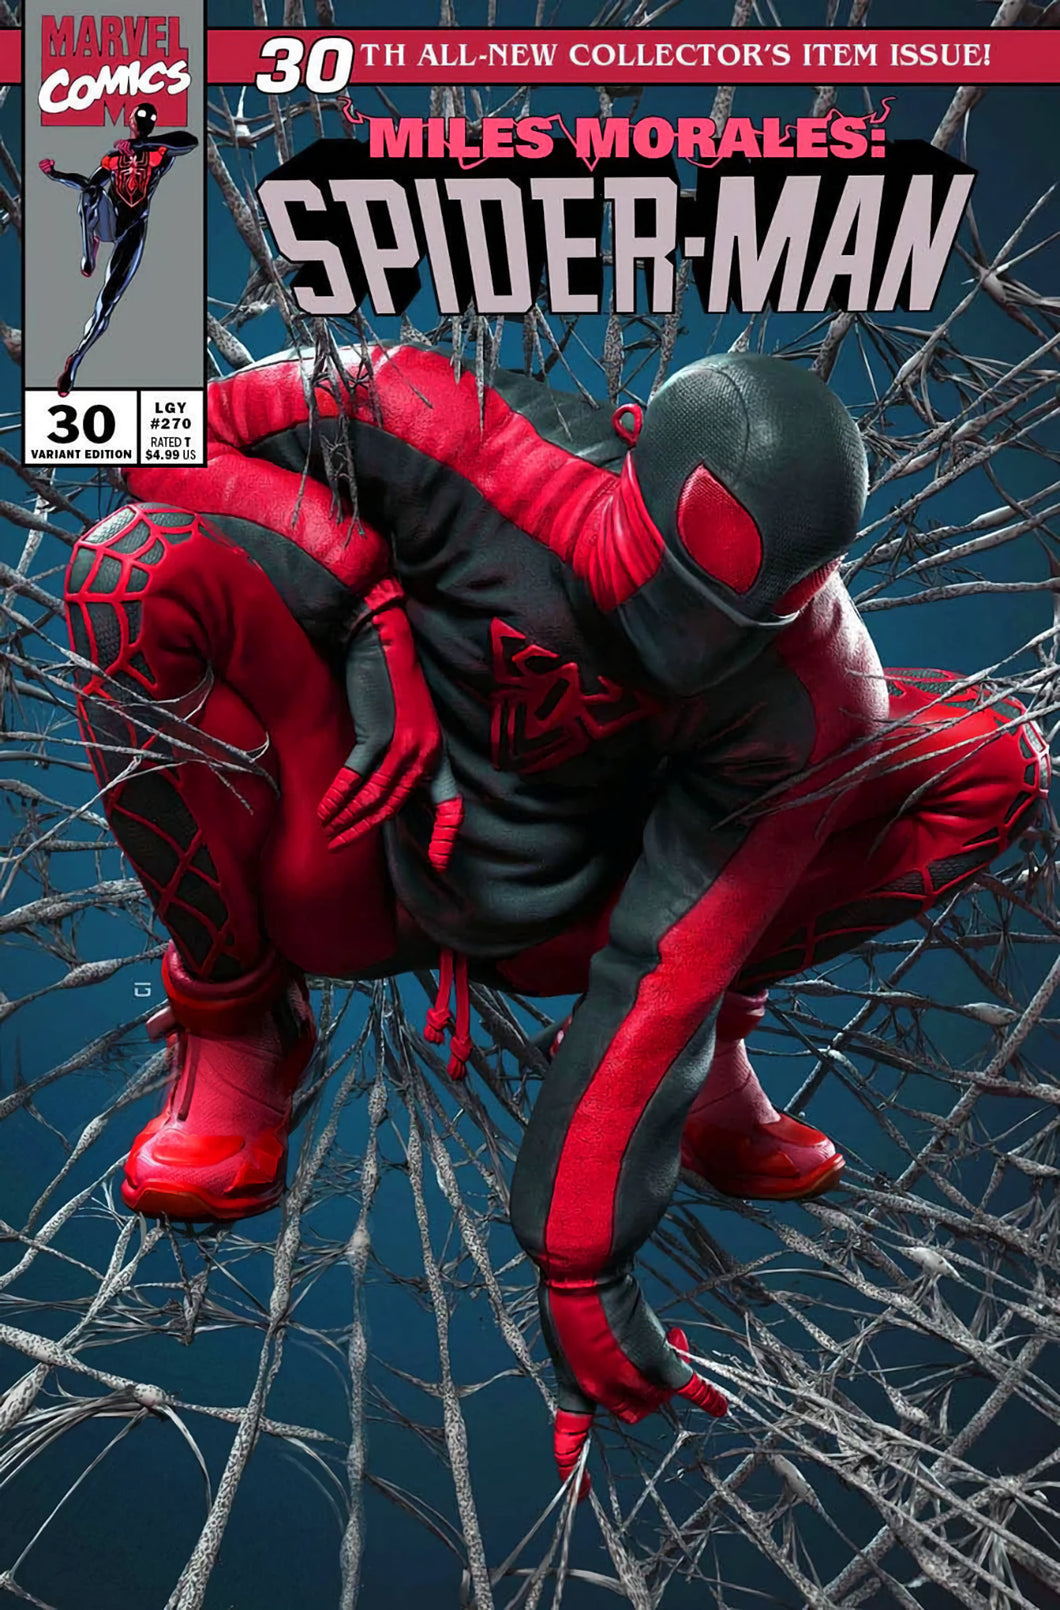 MILES MORALES: SPIDER-MAN #30 (RAFAEL GRASSETTI EXCLUSIVE VARIANT) COMIC BOOK ~ Marvel